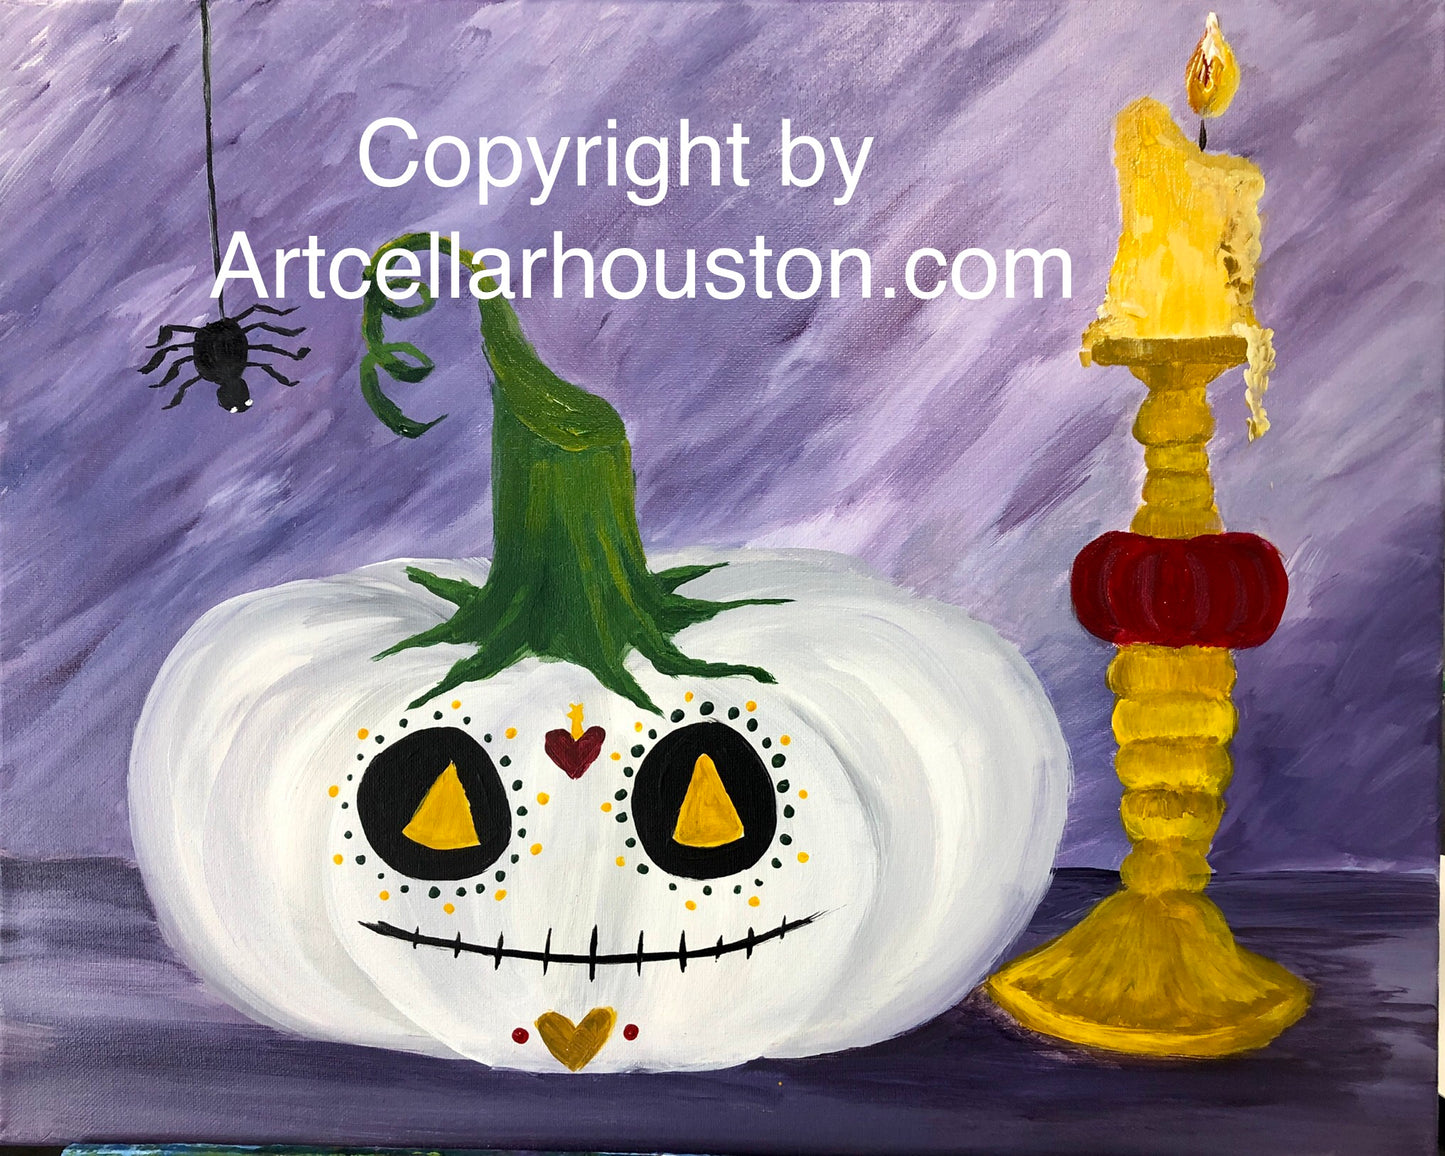 Sat, Oct 2, 9-11a “Pumpkin Spice” Public Houston Family Painting Class